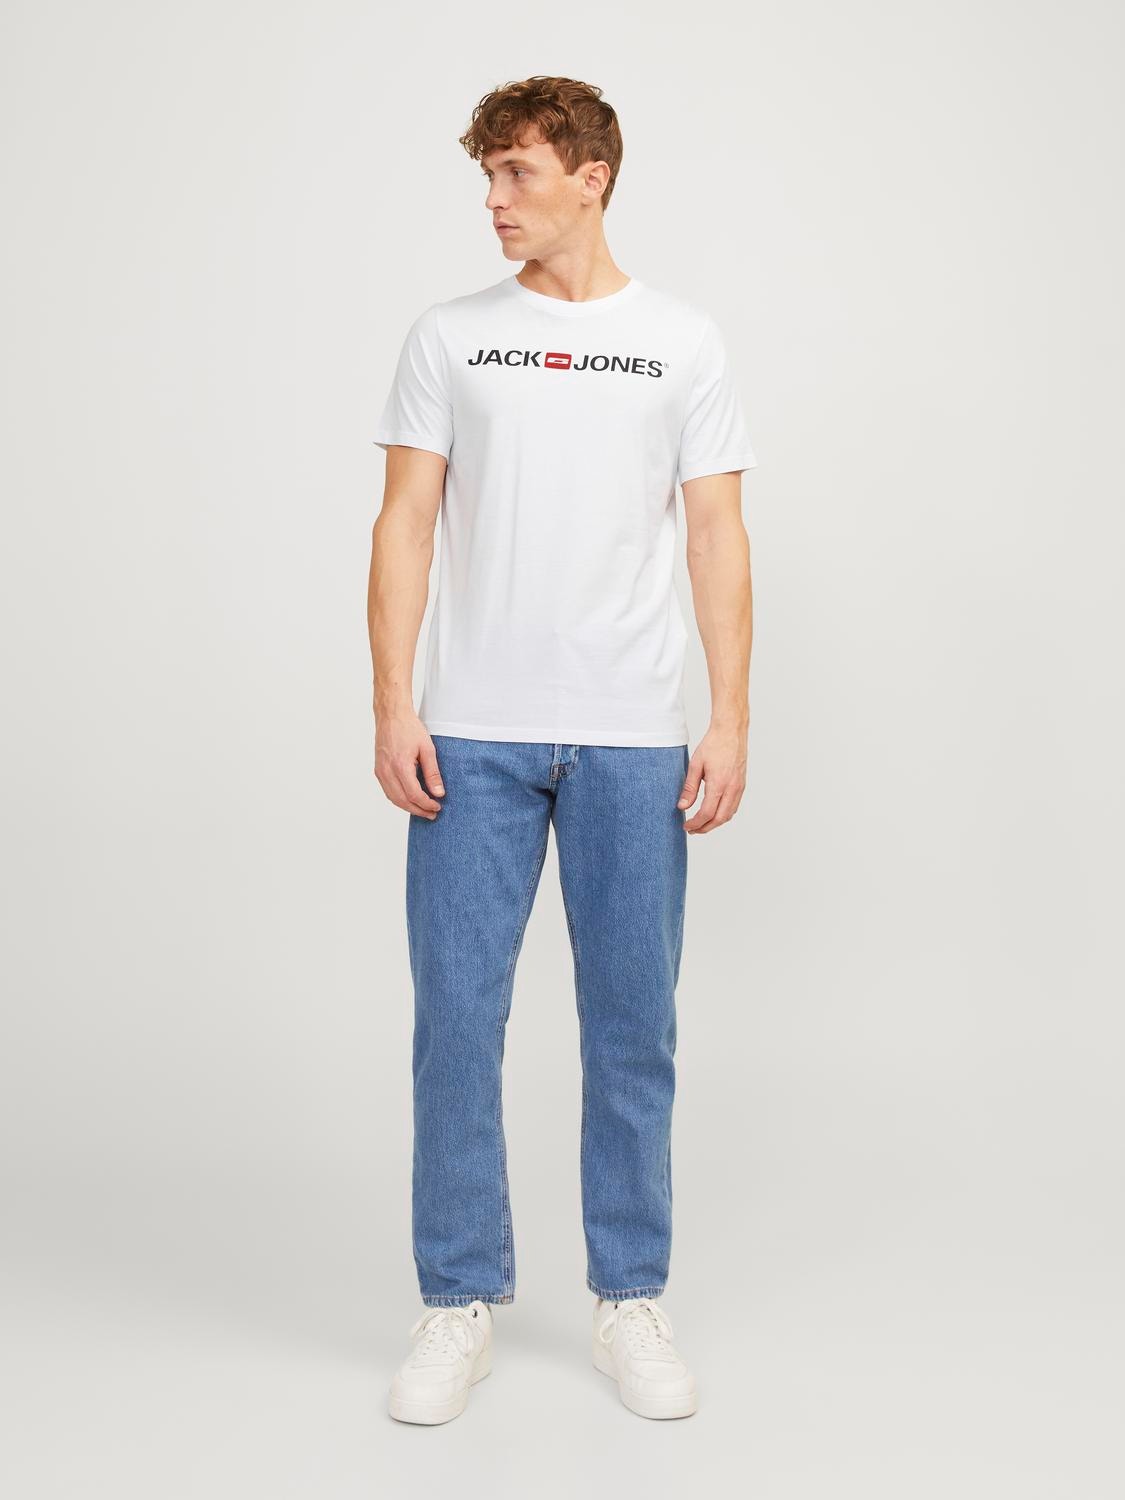 Jack & Jones 3 Logo O-Neck T-shirt -White - 12191330